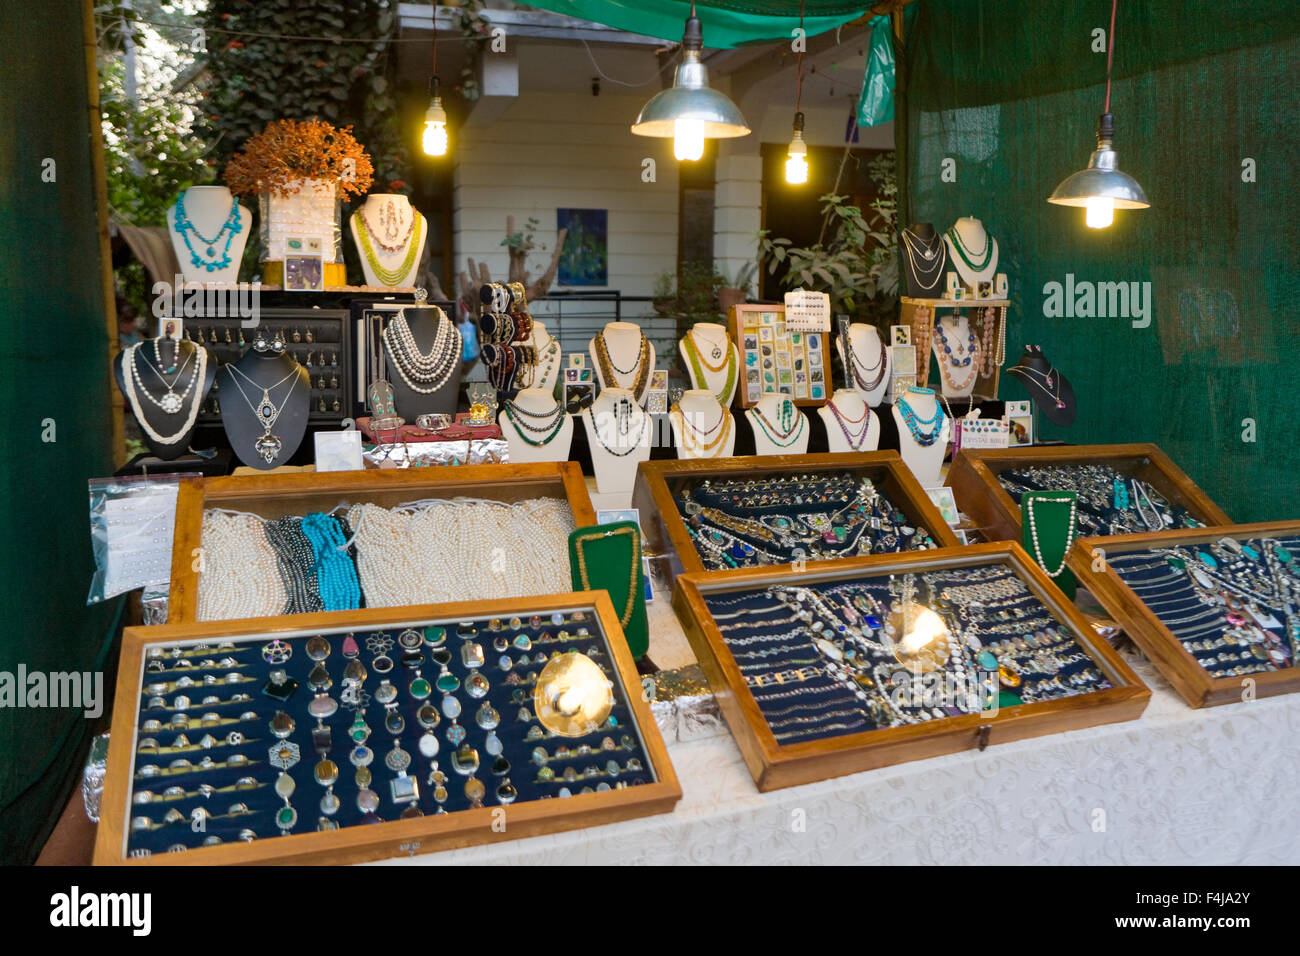 Market fair with jewelry, India. Stock Photo